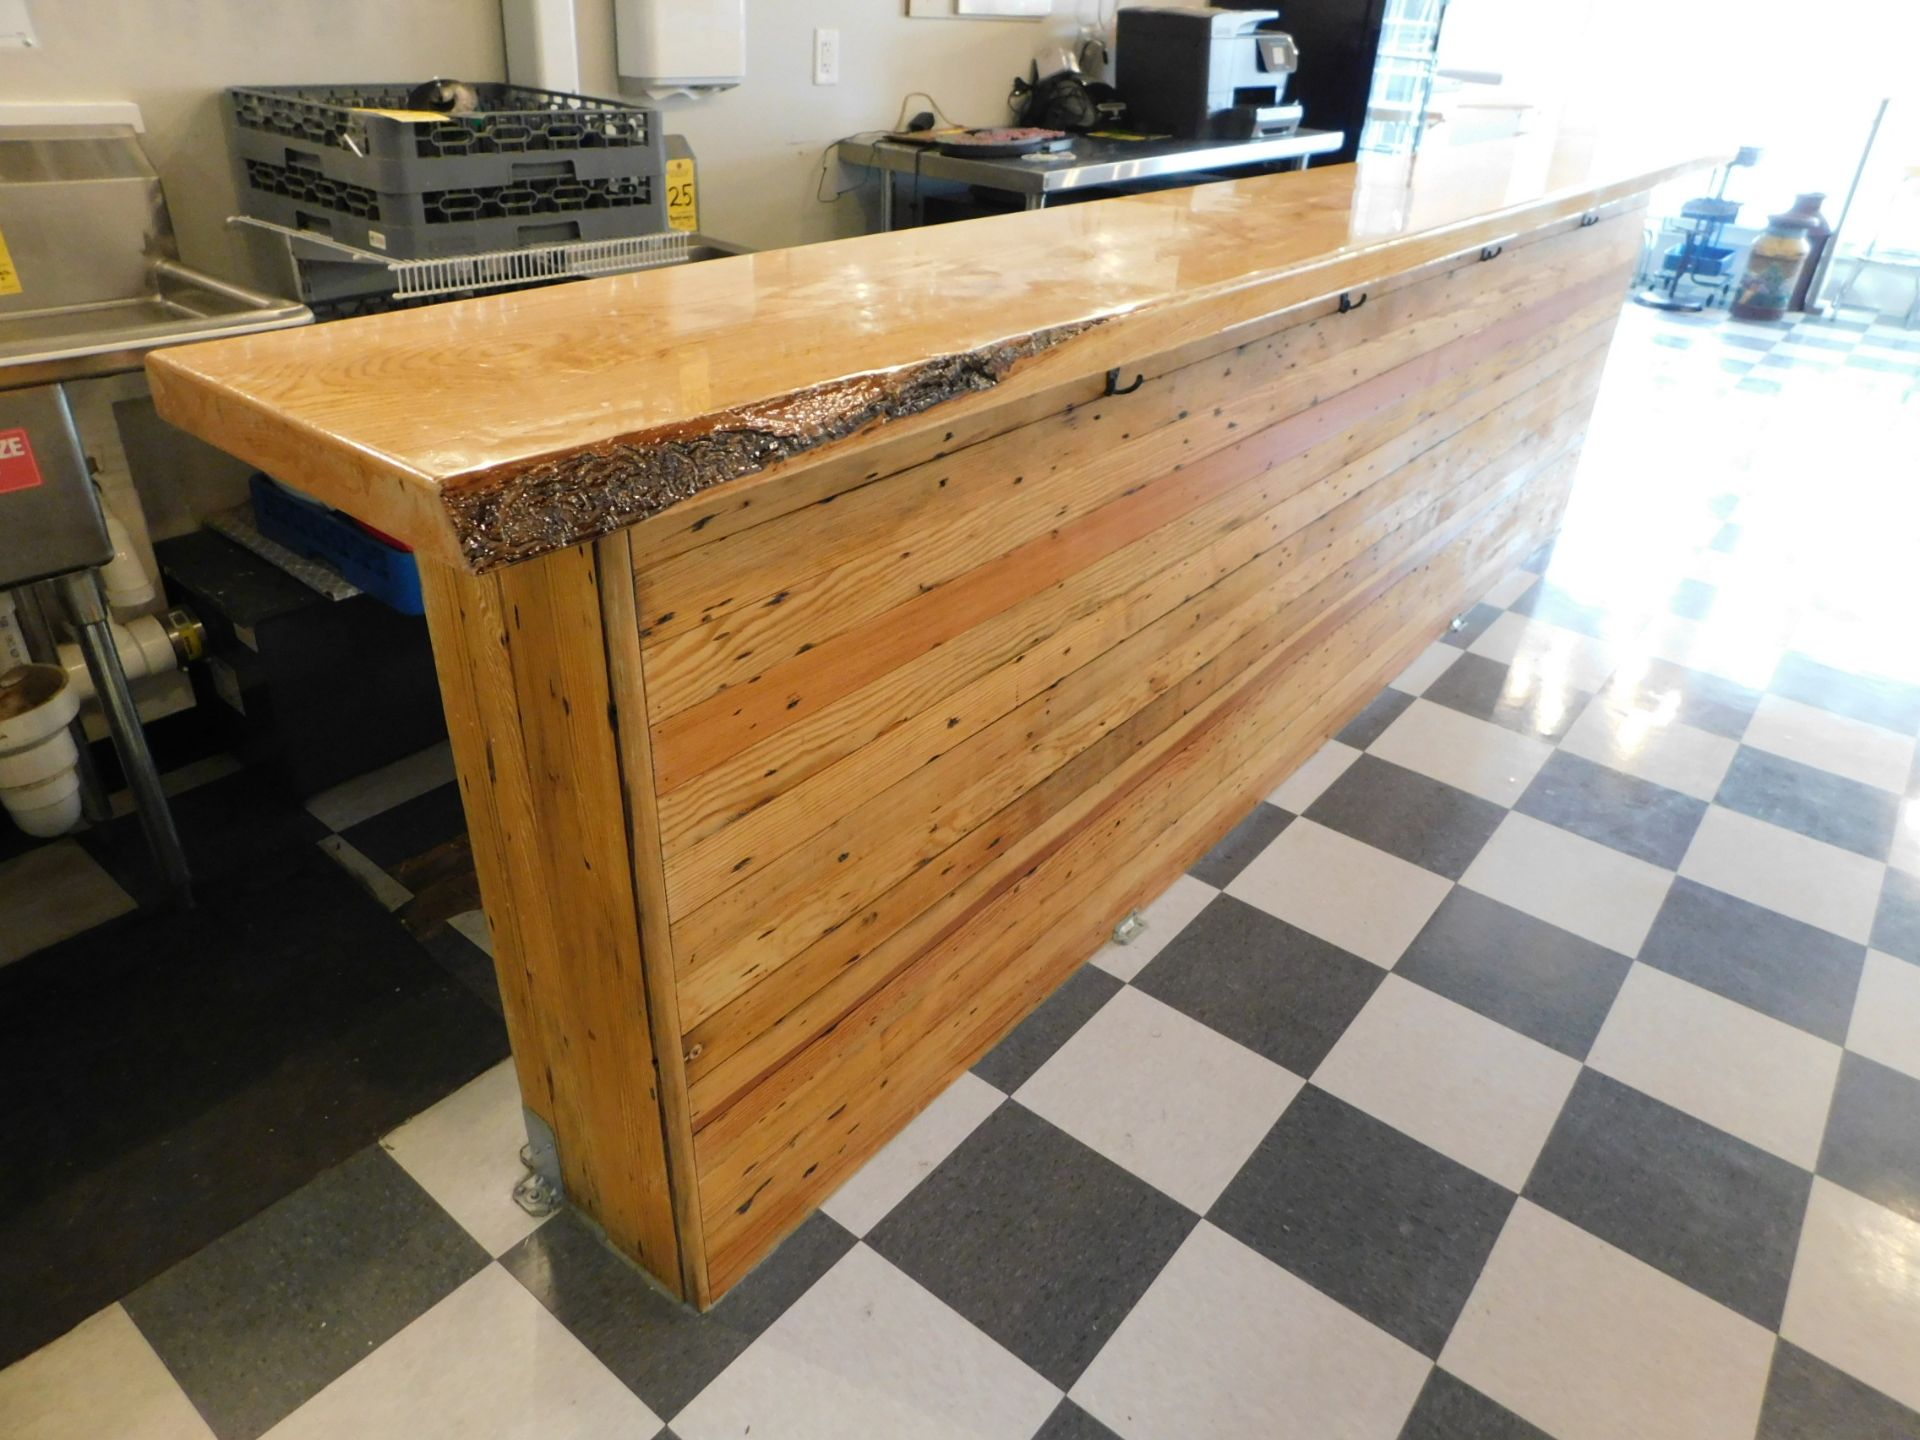 12' Wood Finish Bar, Mill Cut Hardwood Slab, Epoxy Counter Top, Wood Plank Sides, 12' L x 17" W x - Image 6 of 7